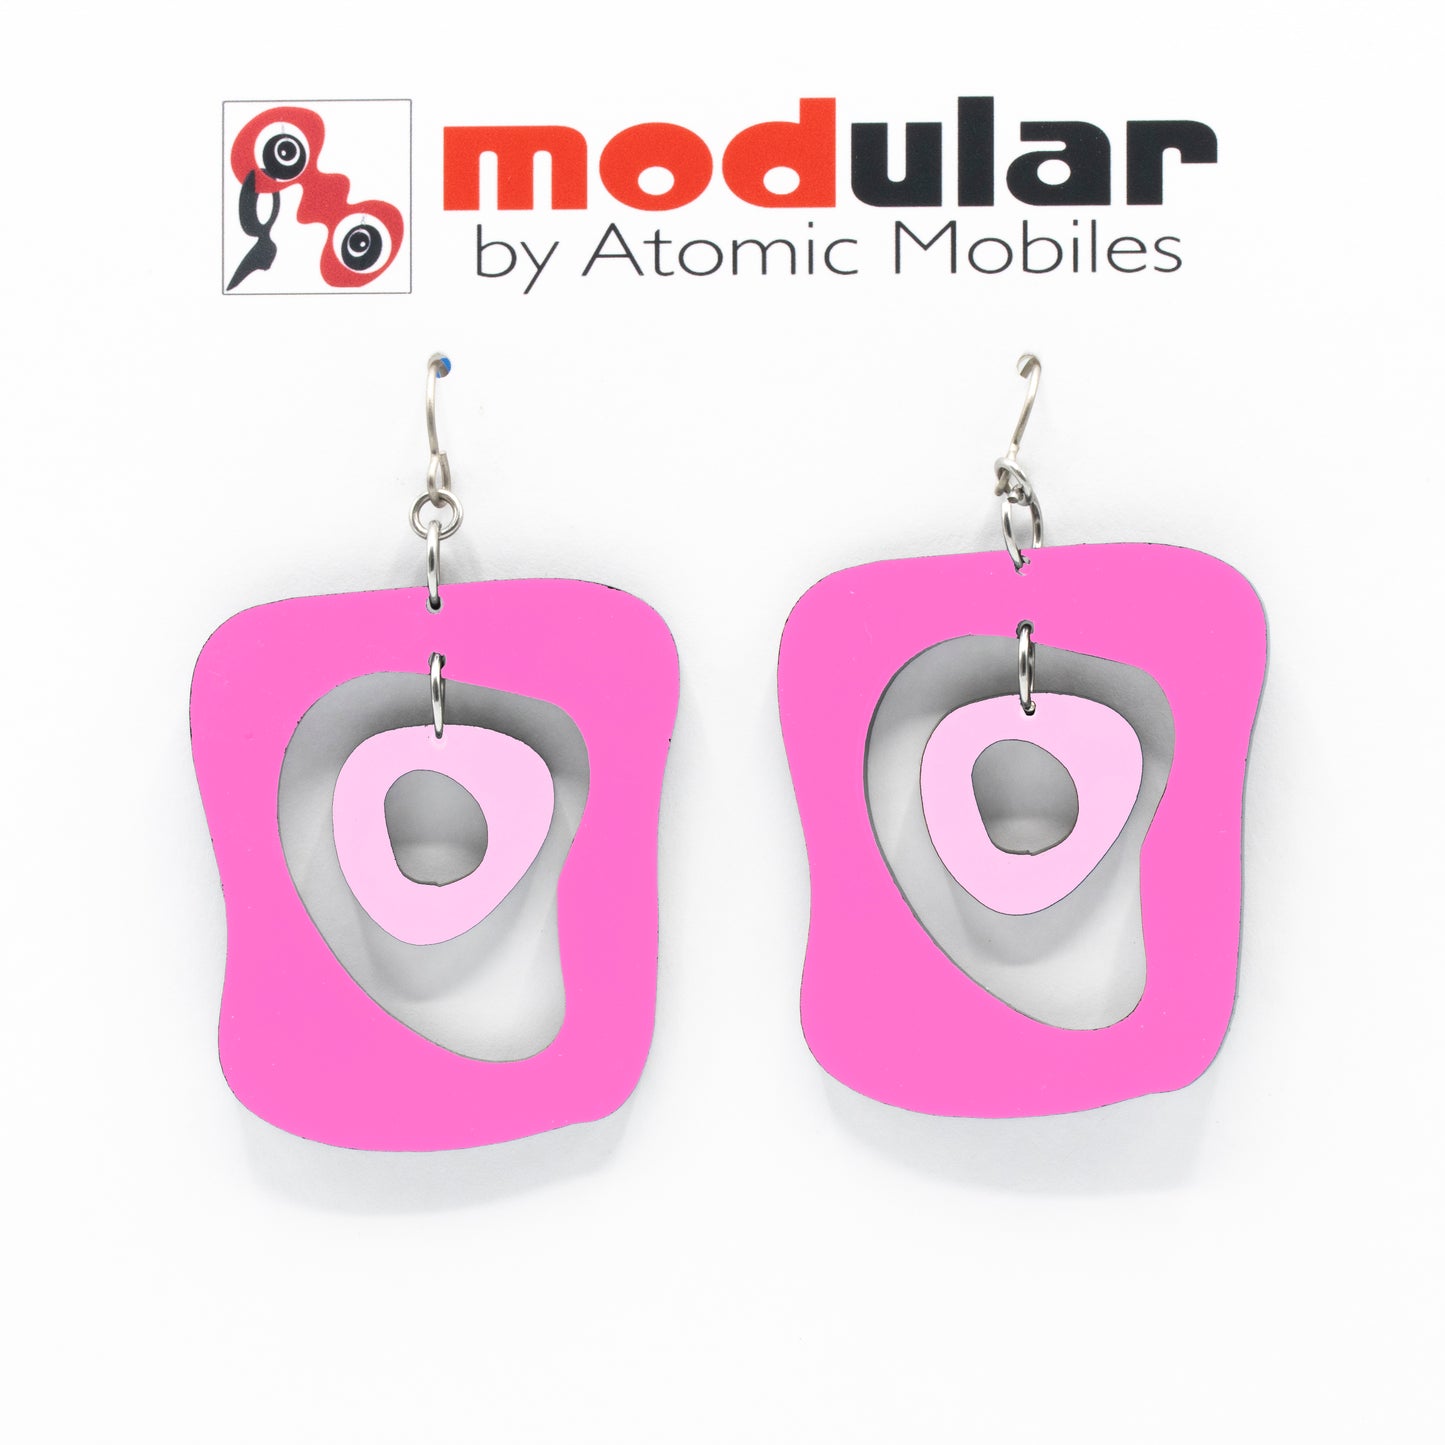 MODular Earrings - Mid Mod Statement Earrings in Hot Pink by AtomicMobiles.com - mid century inspired modern art dangle earrings